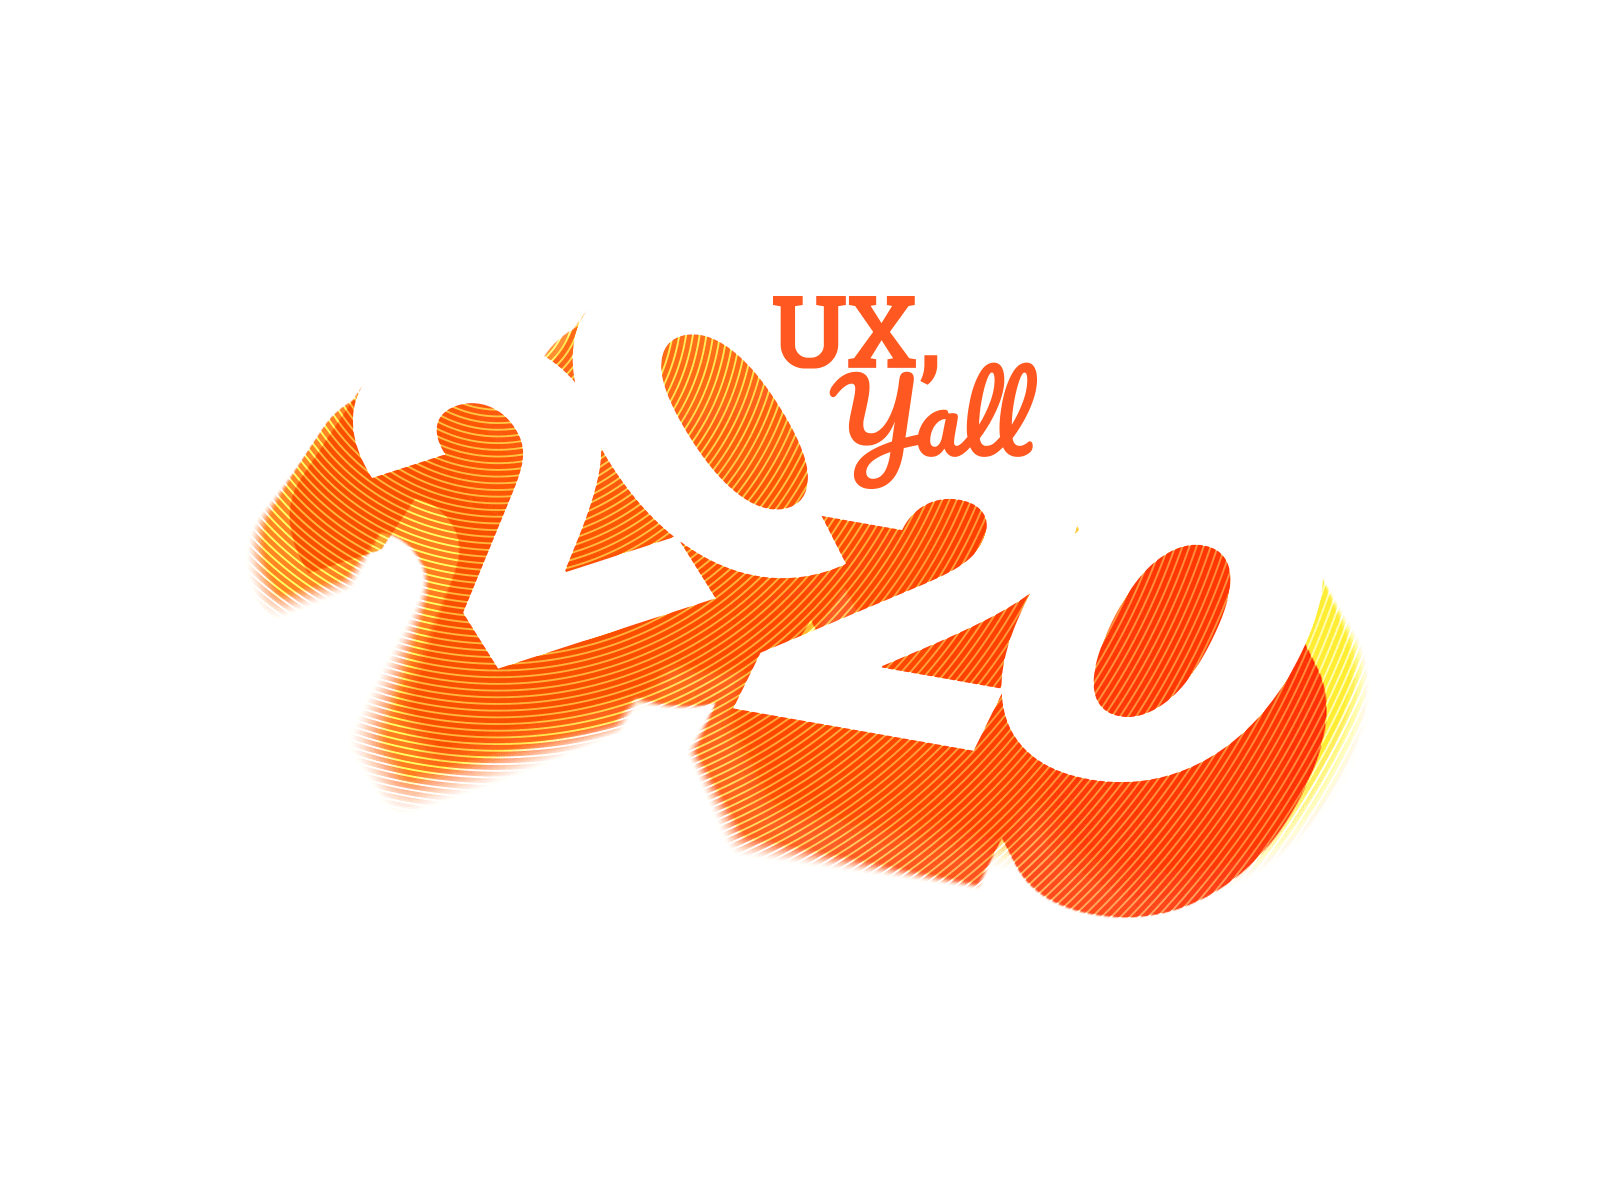 UX Y'all 2020 blur branding conference identity logo